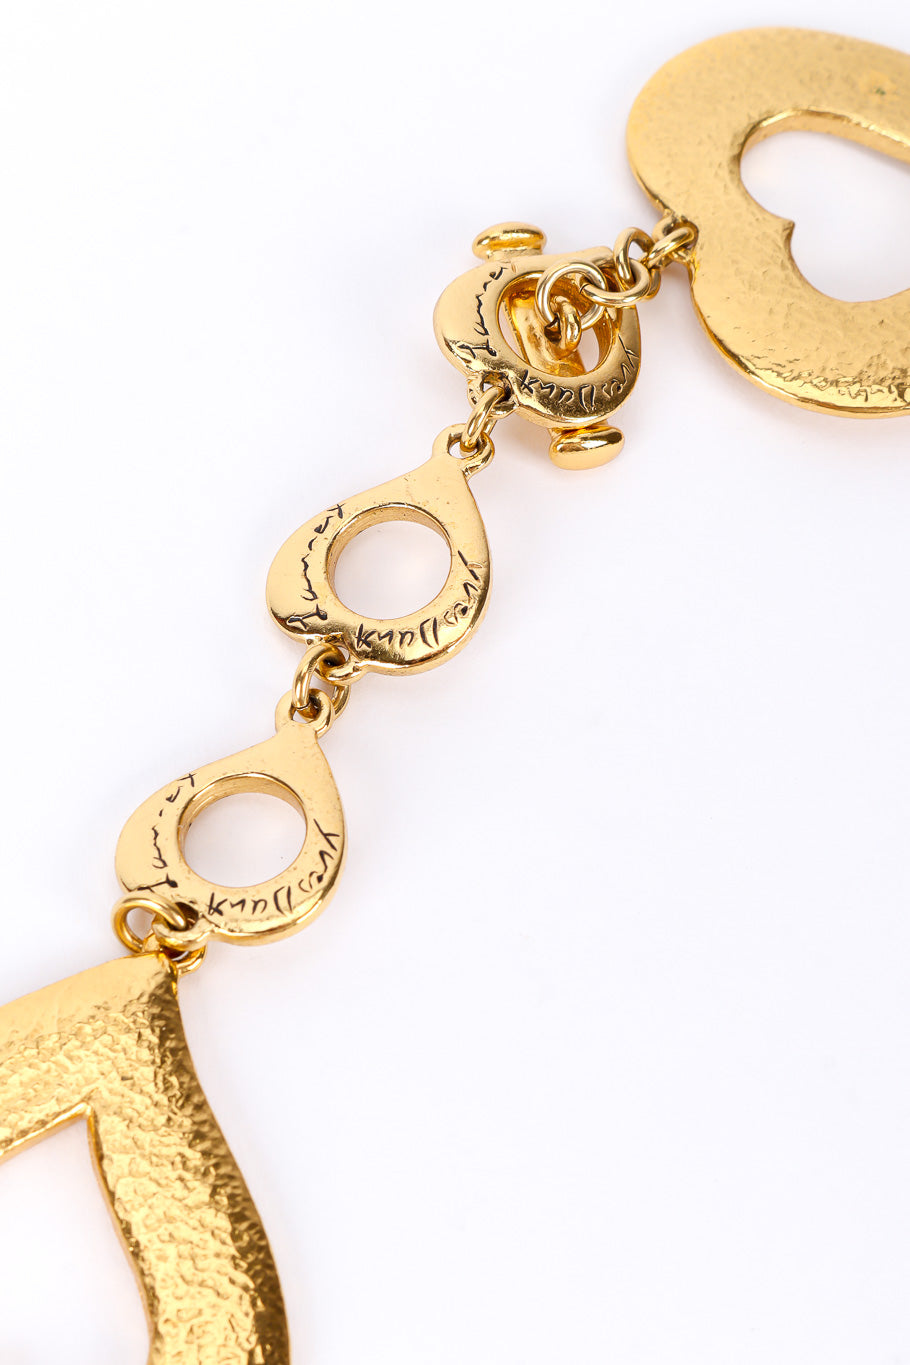 Vintage Yves Saint Laurent Heart Pendant Collar Necklace toggle clasp hooked closeup @Recessla